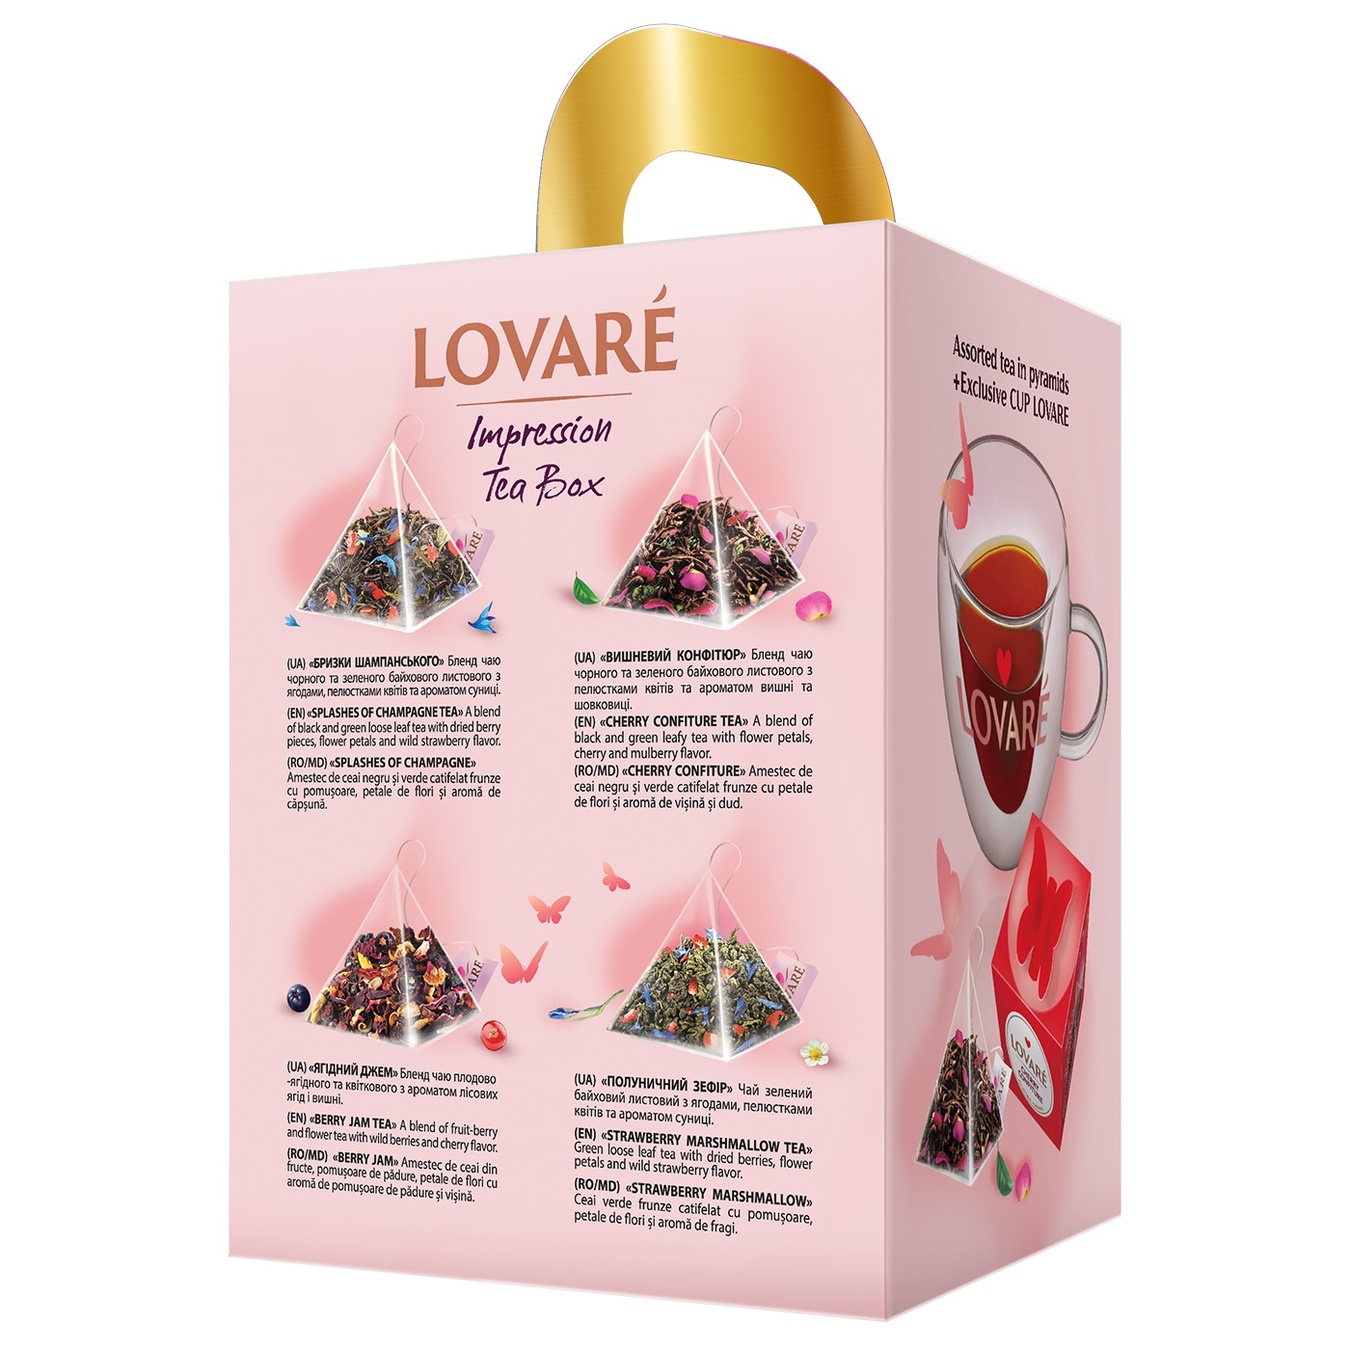 Набор Коллекция чаев LOVARE Impression tea box 4 вида пирамидок по 7шт + чашка с логотипом 56г 2